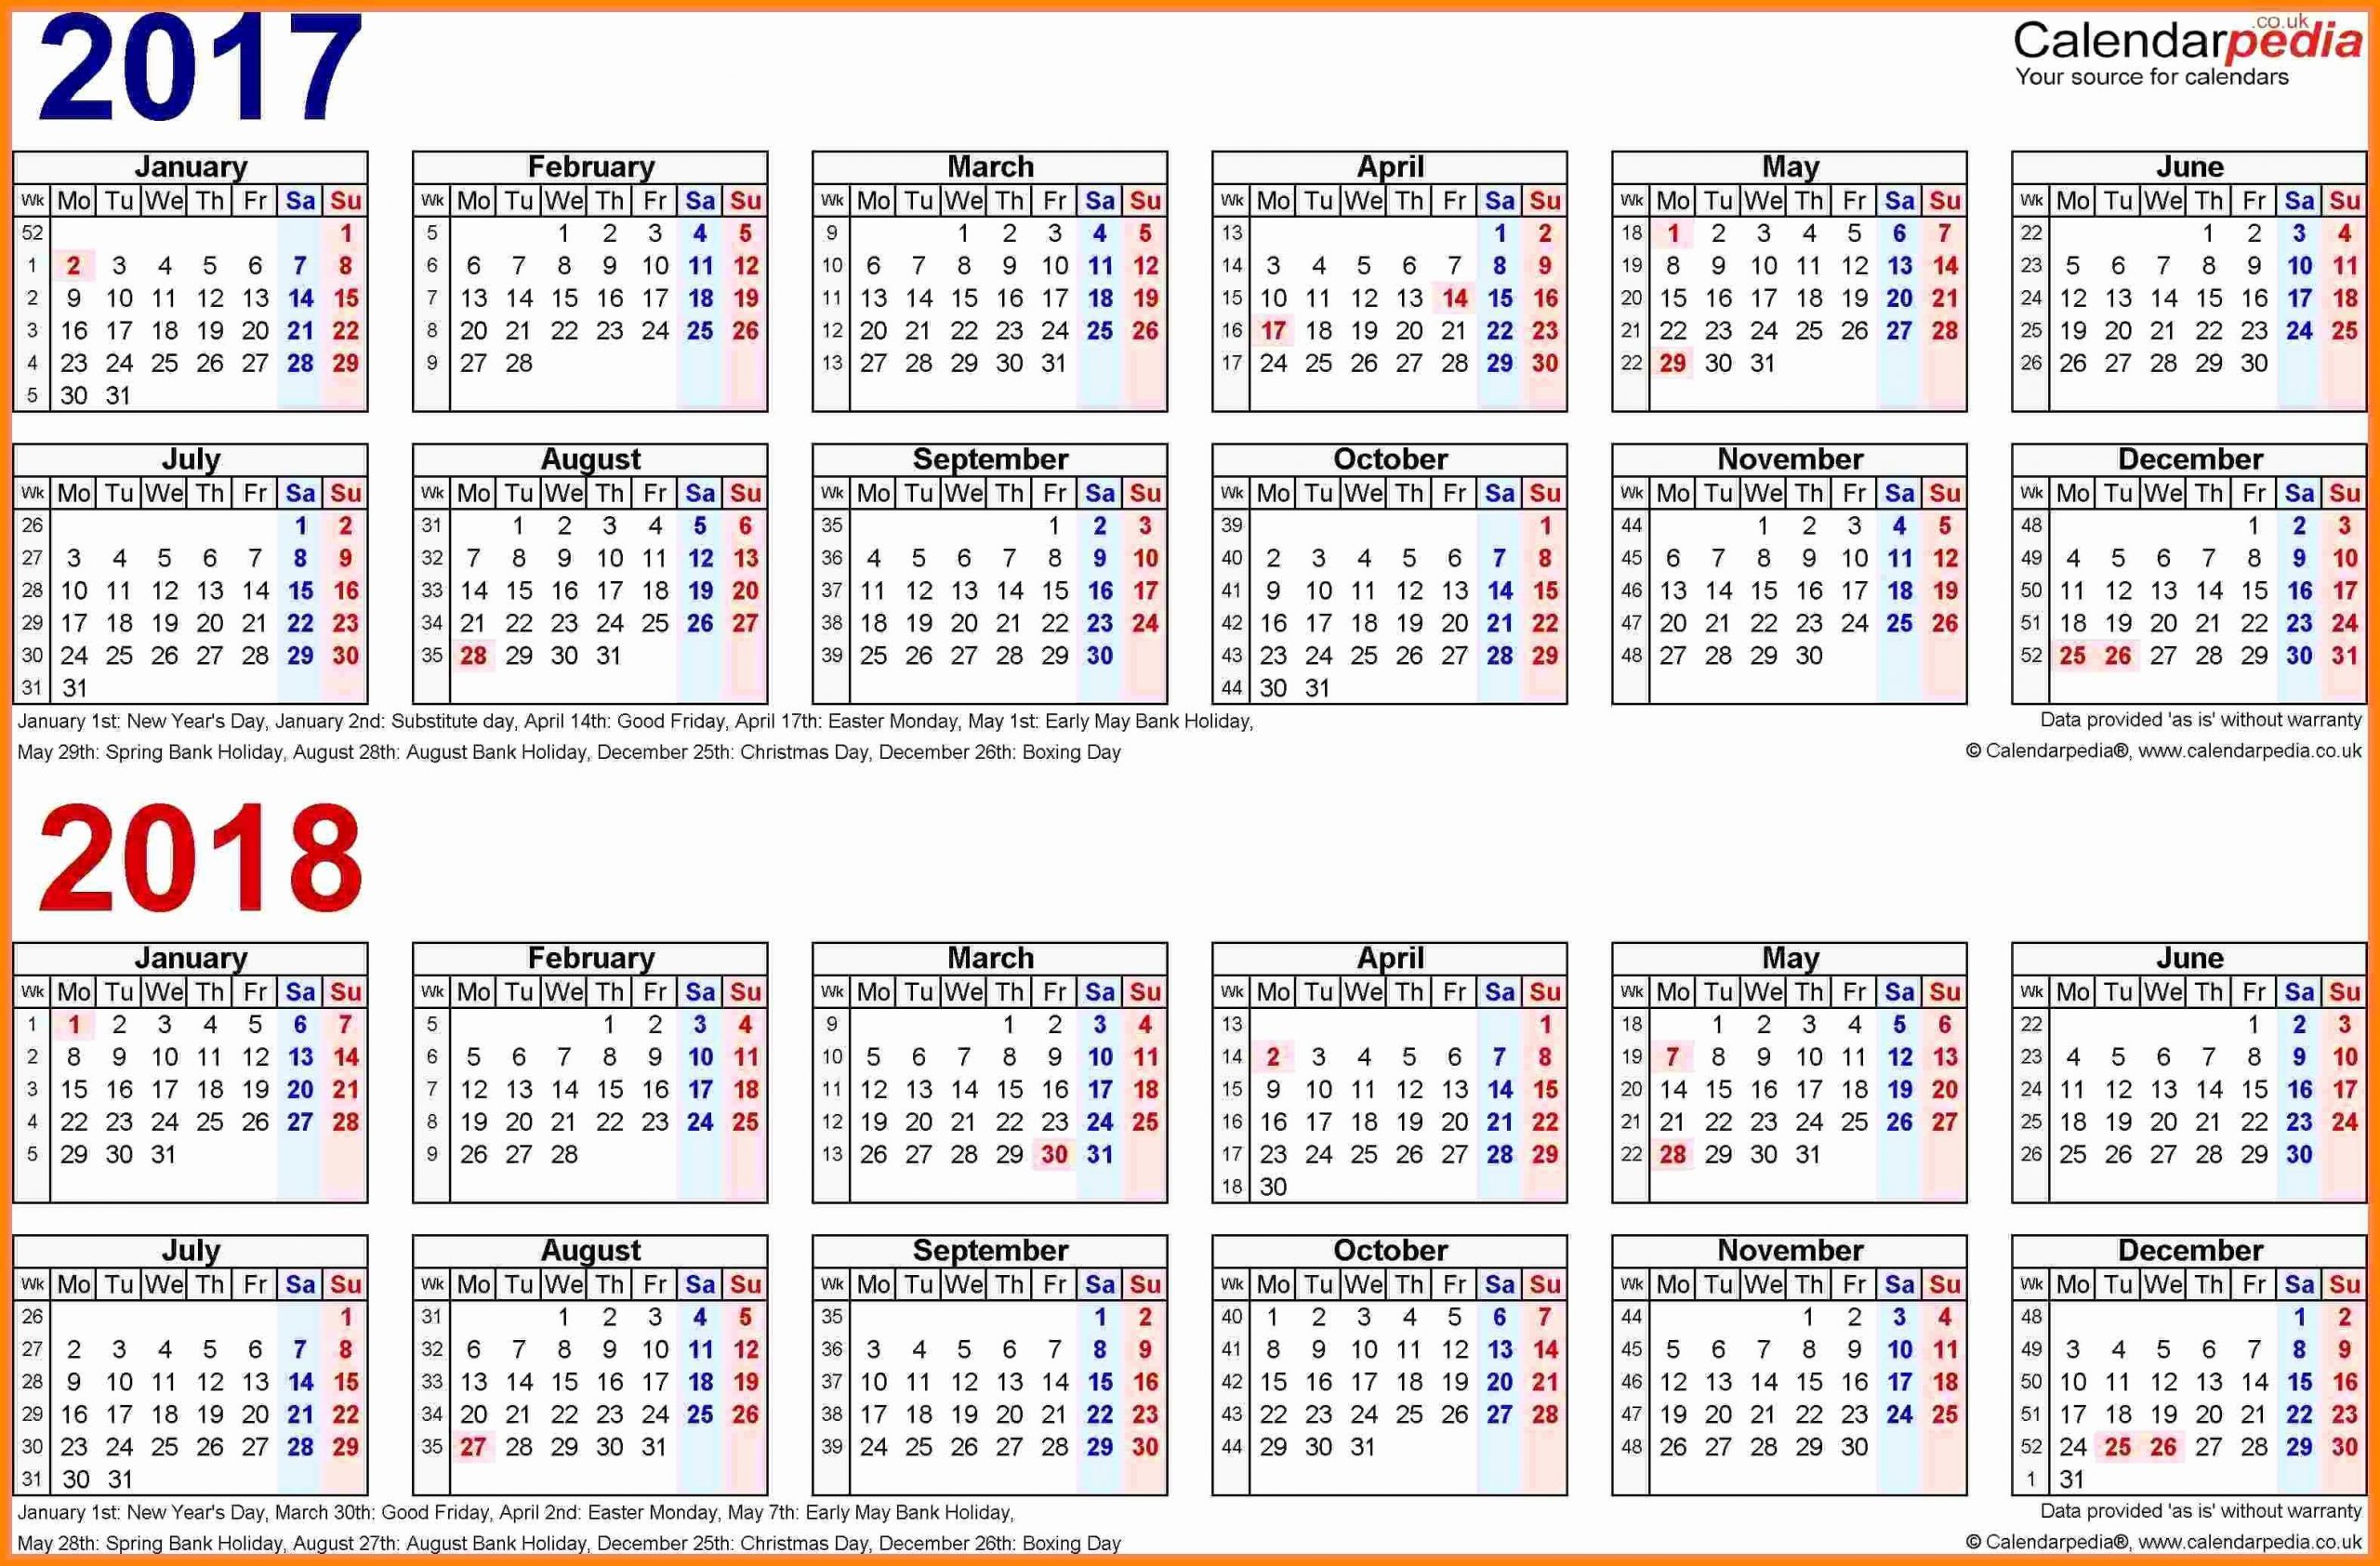 40 biweekly pay schedule template in 2020 calendar 1